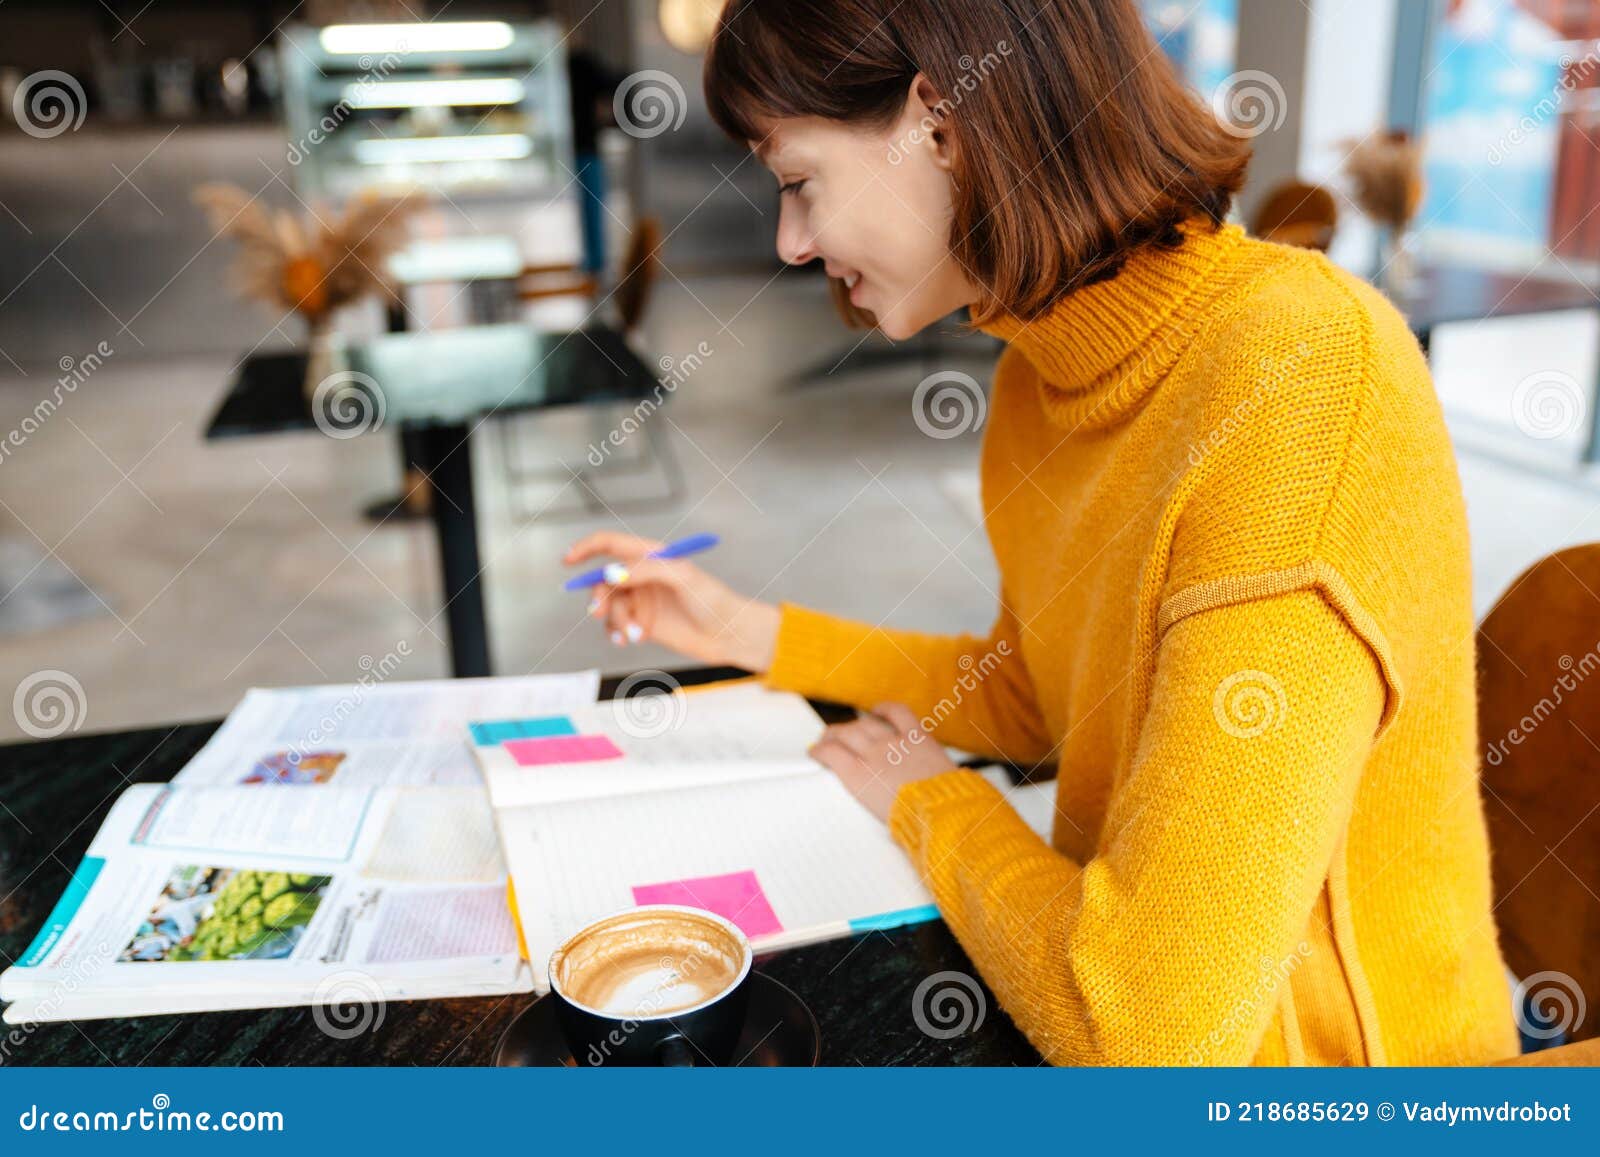 homework in a cafe